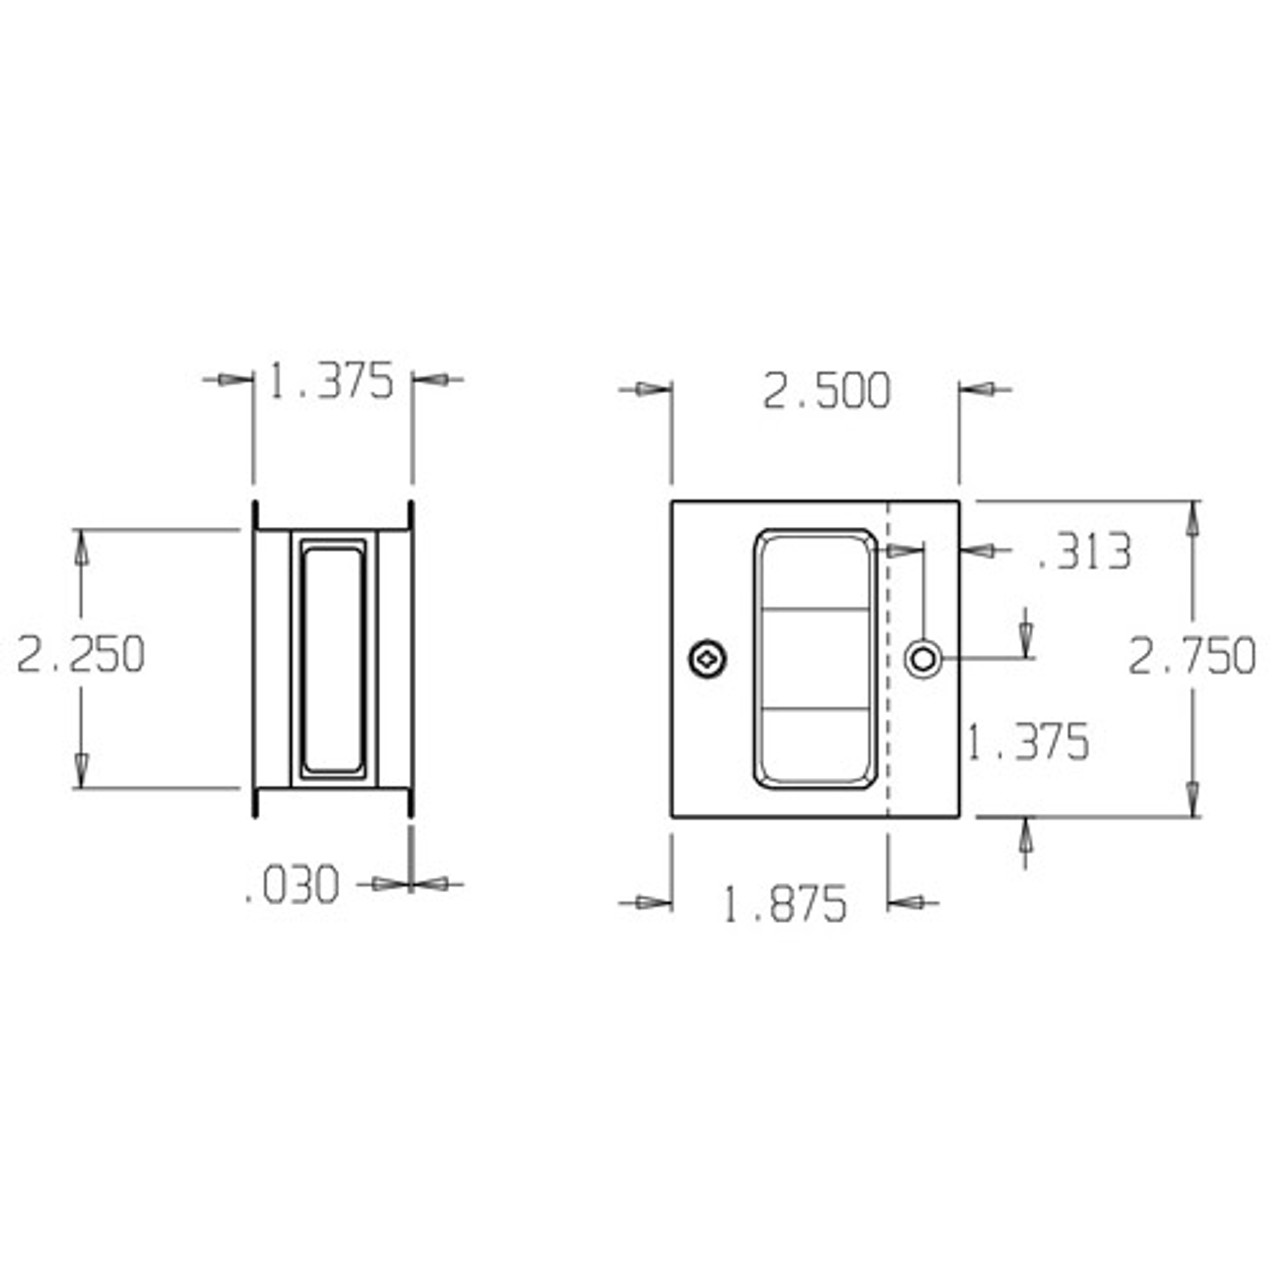 PDL-100-620 Don Jo Pocket Door Lock Dimensional View